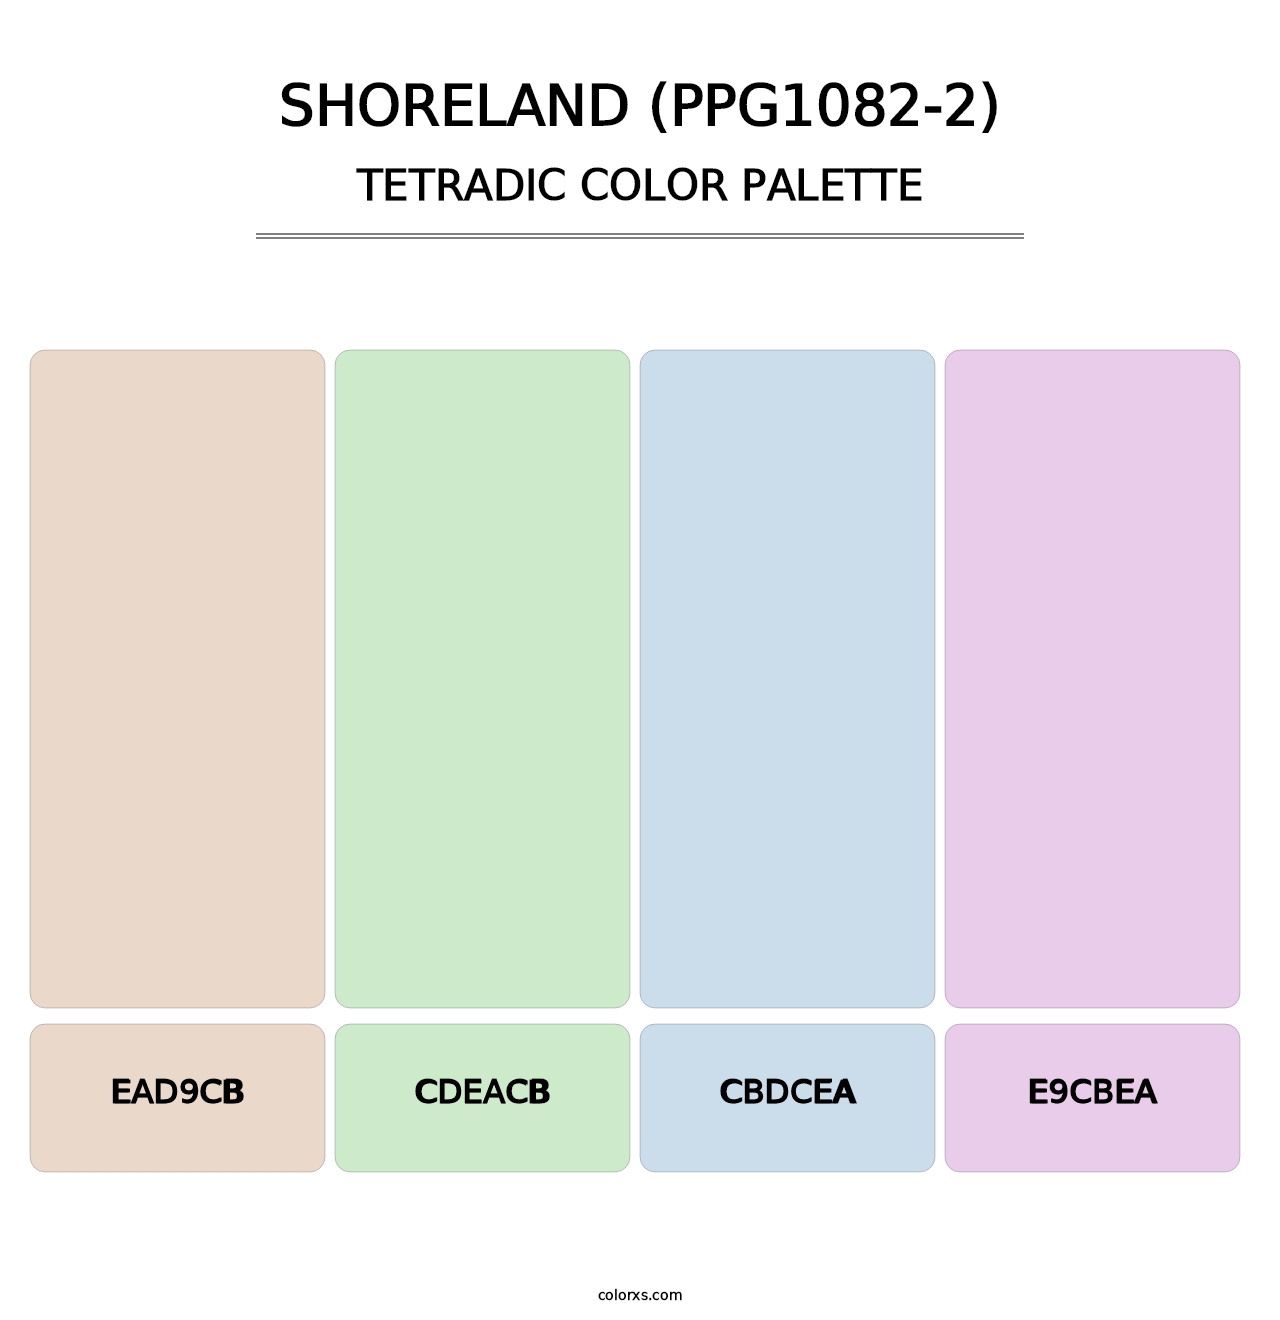 Shoreland (PPG1082-2) - Tetradic Color Palette